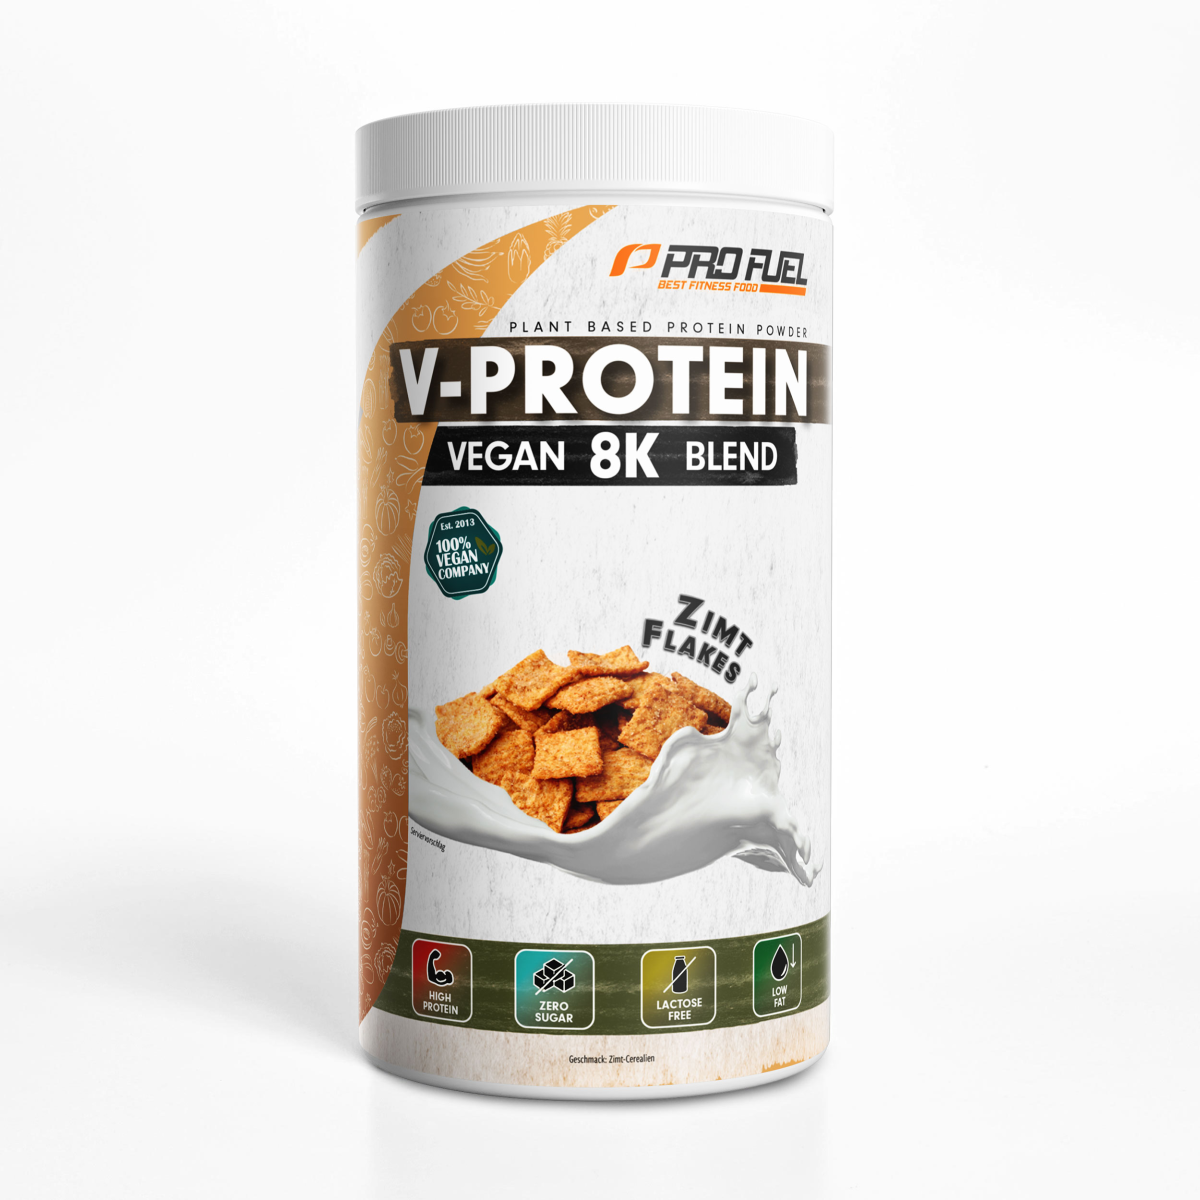 ProFuel V-PROTEIN vegan 8K Blend Zimt-Flakes